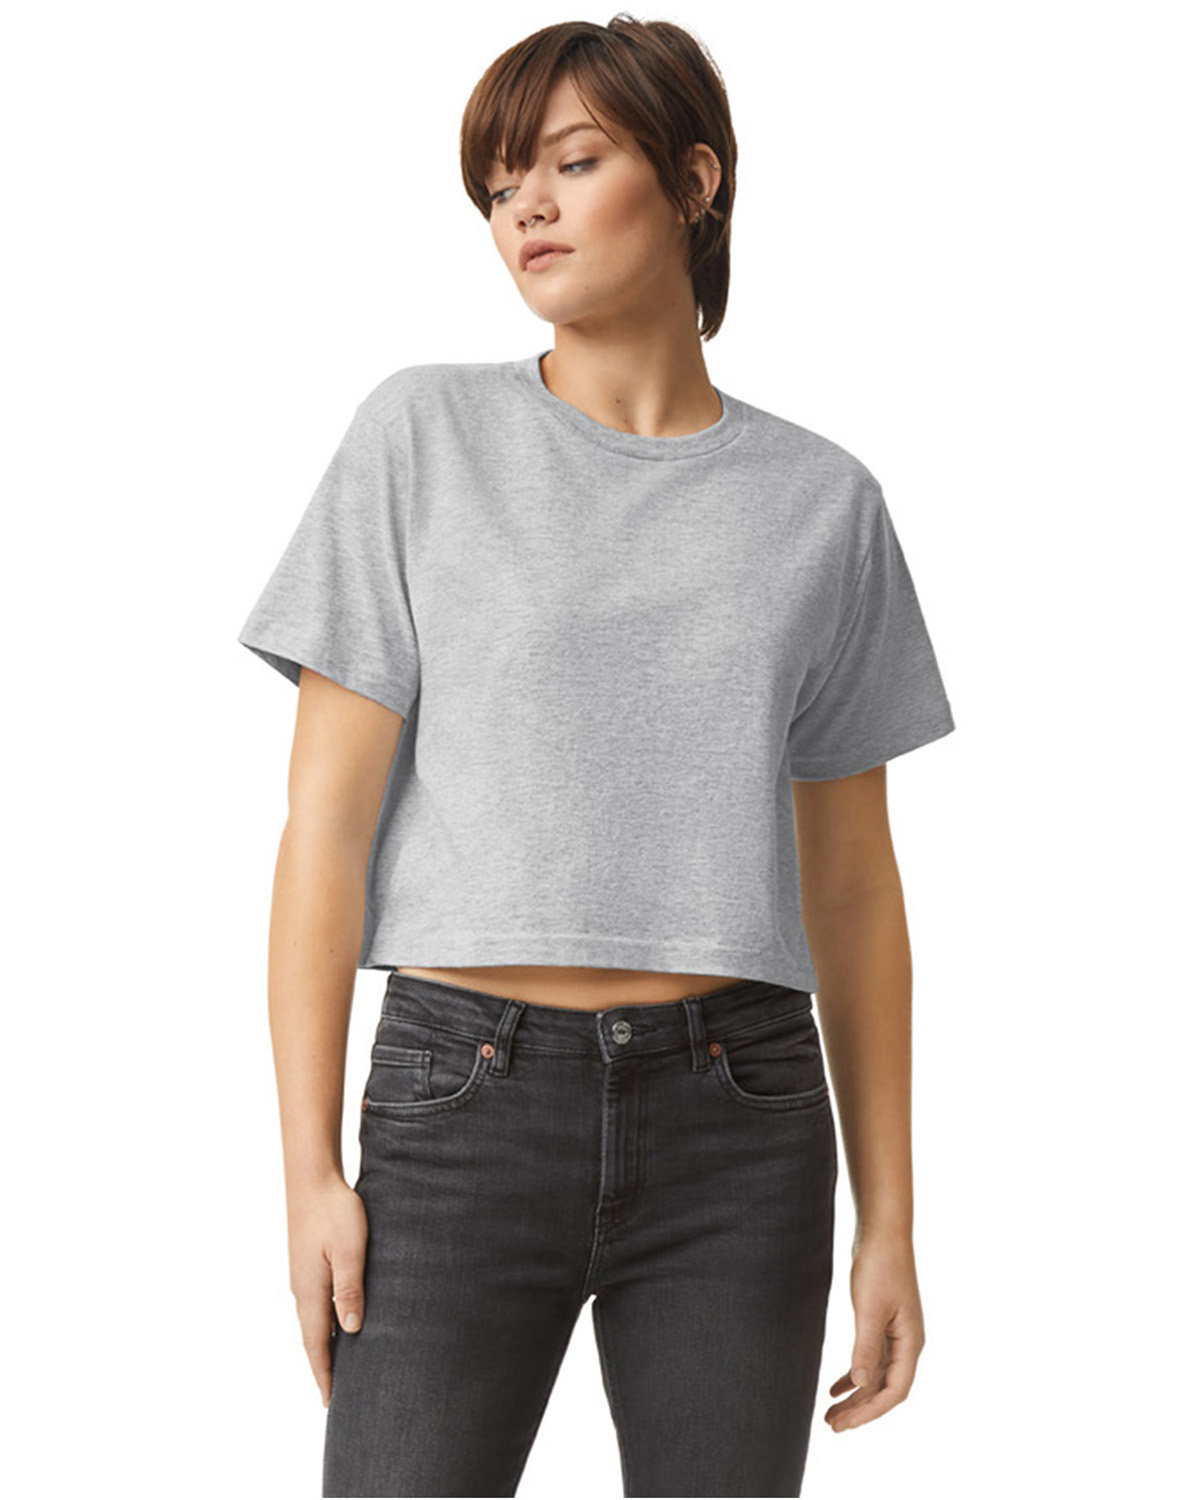 American Apparel Ladies' Fine Jersey Boxy T-Shirt HEATHER GREY 